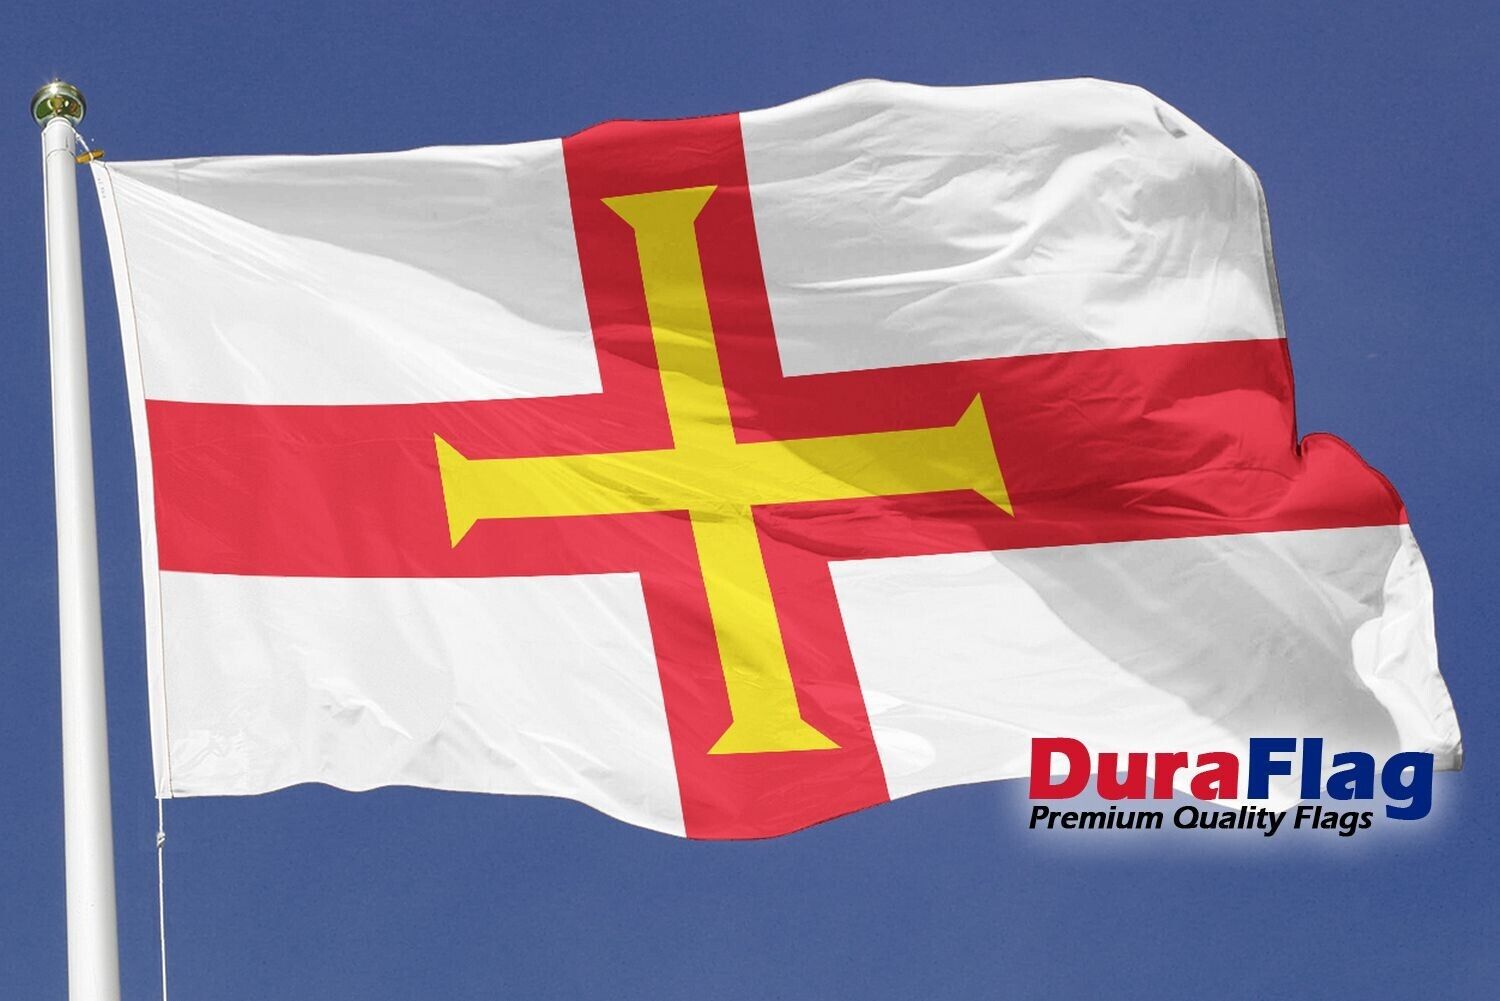 Guernsey Duraflag Premium Quality (20x12inch) Flag